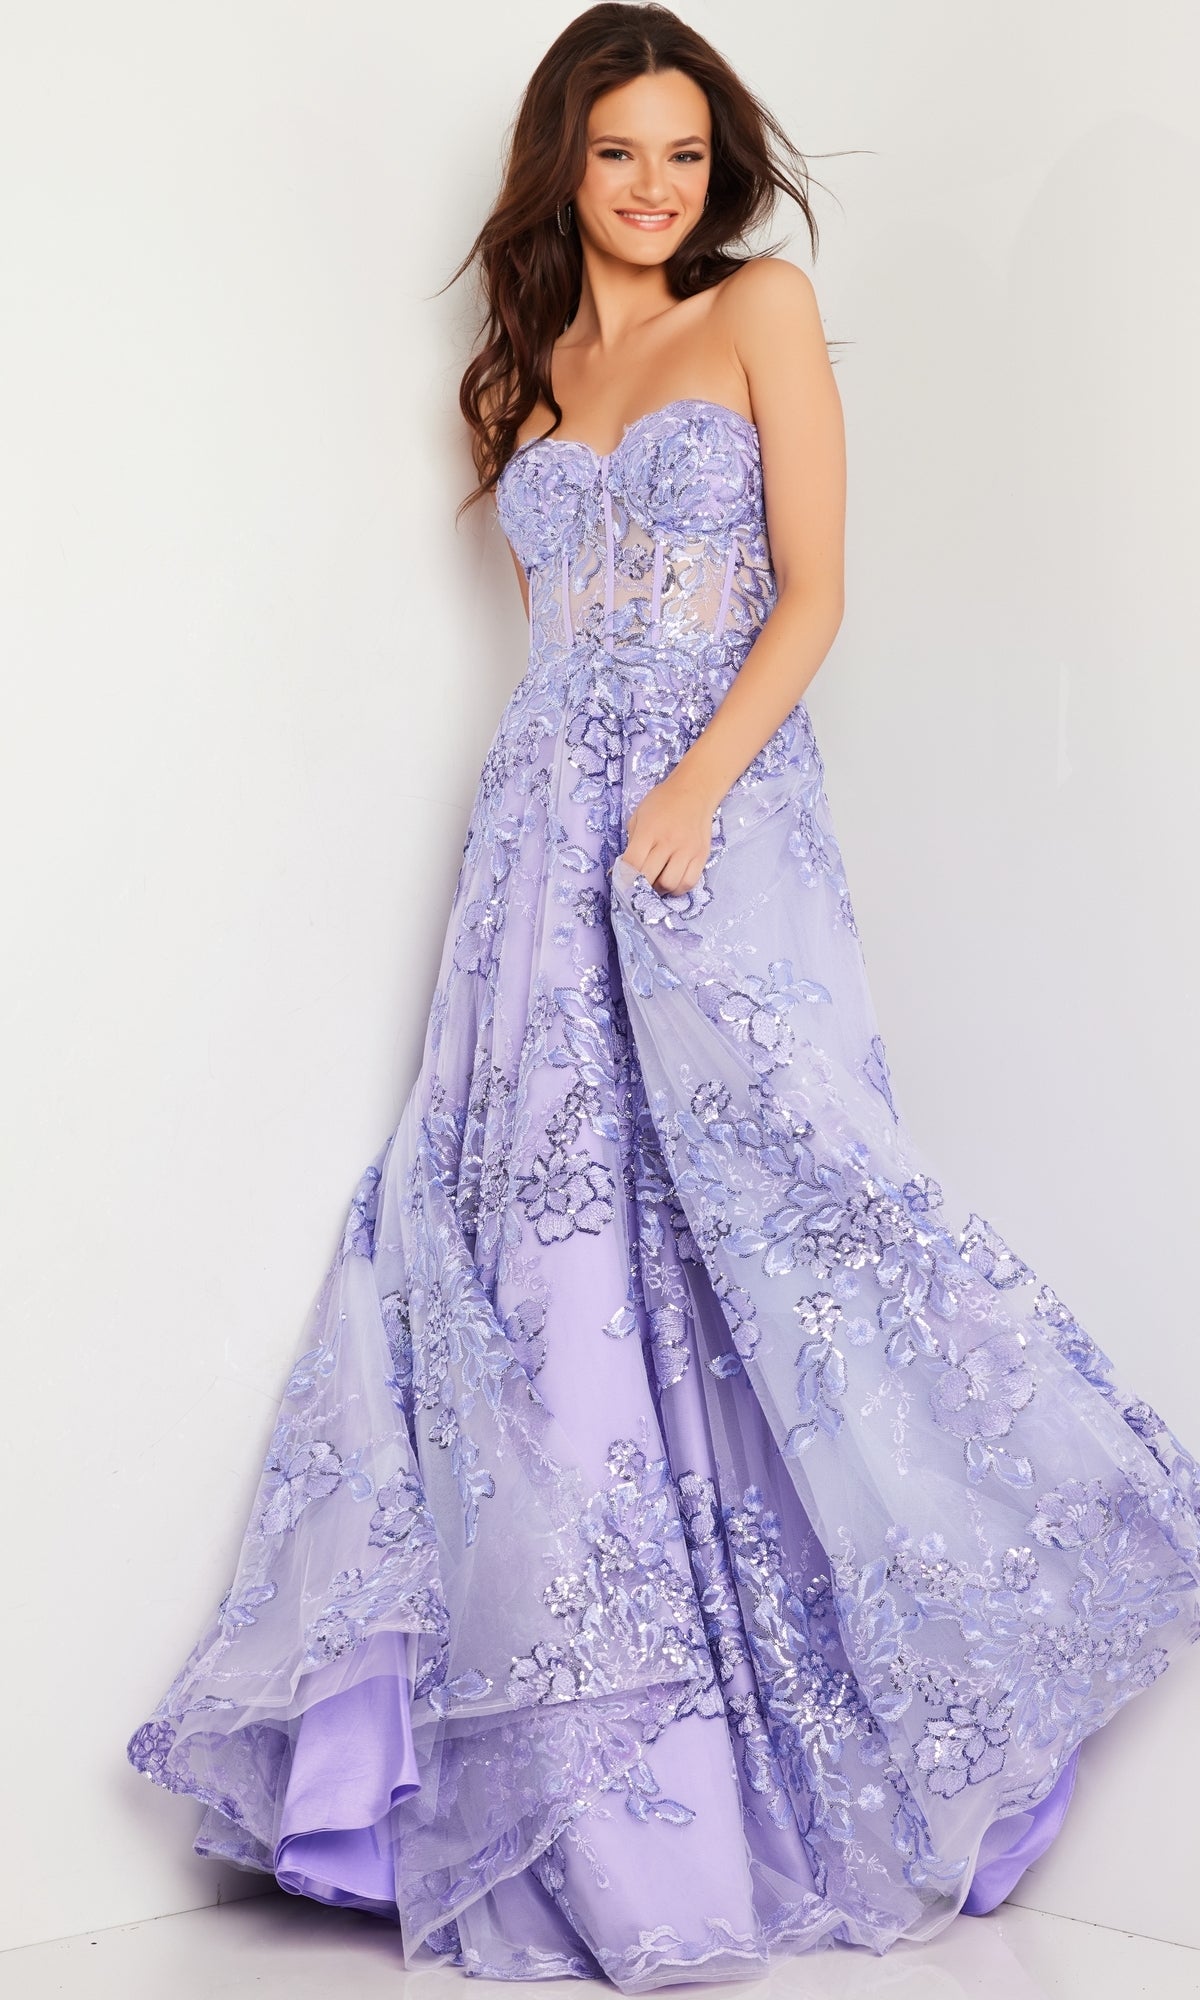 Long Prom Dress 26223 by Jovani